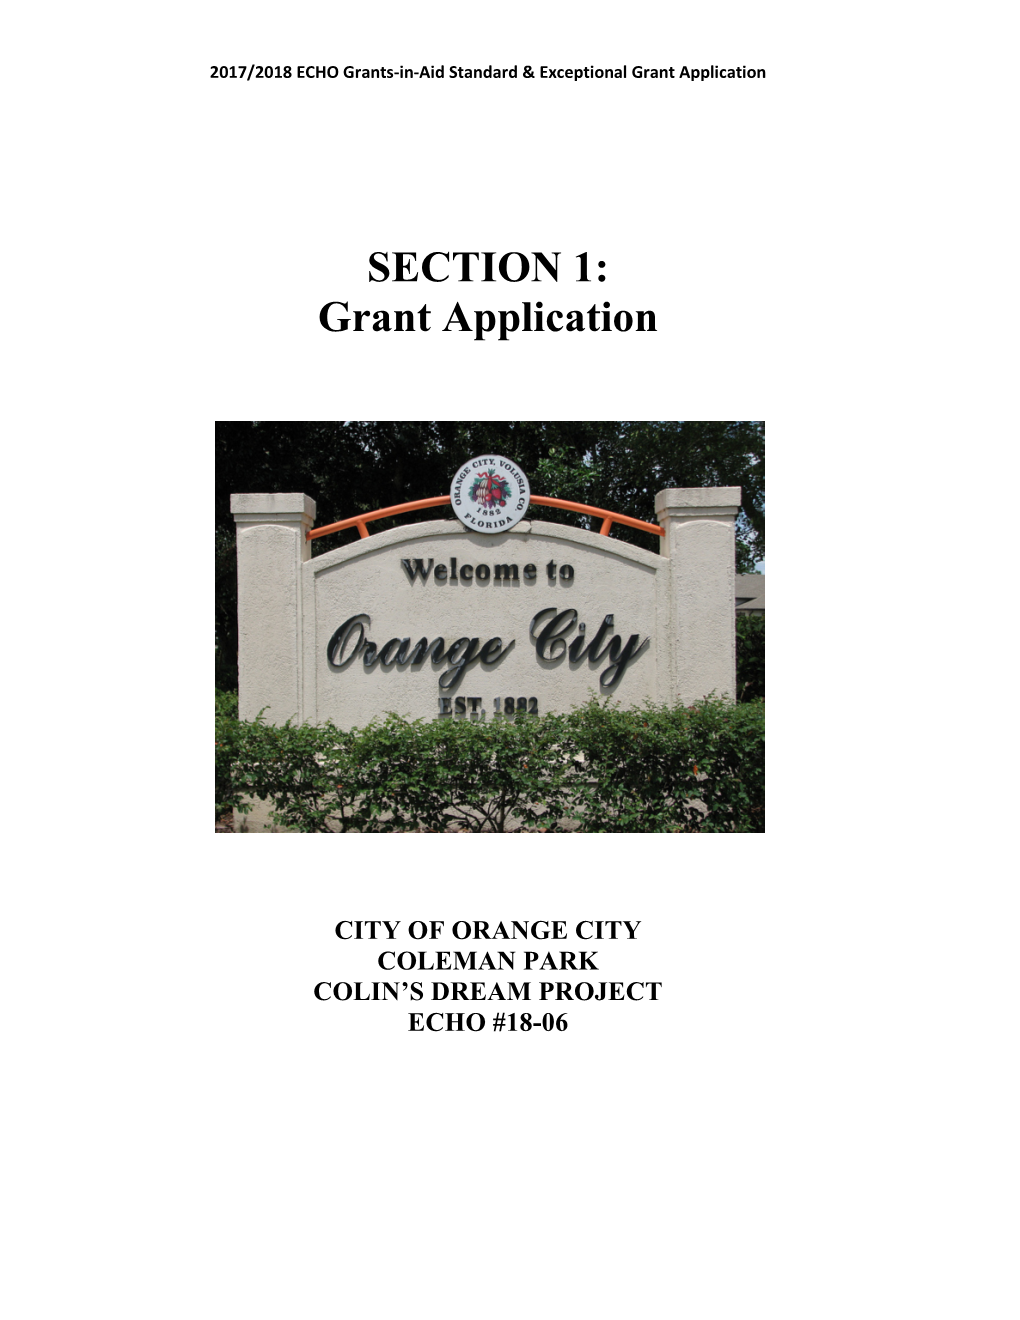 Grant Application